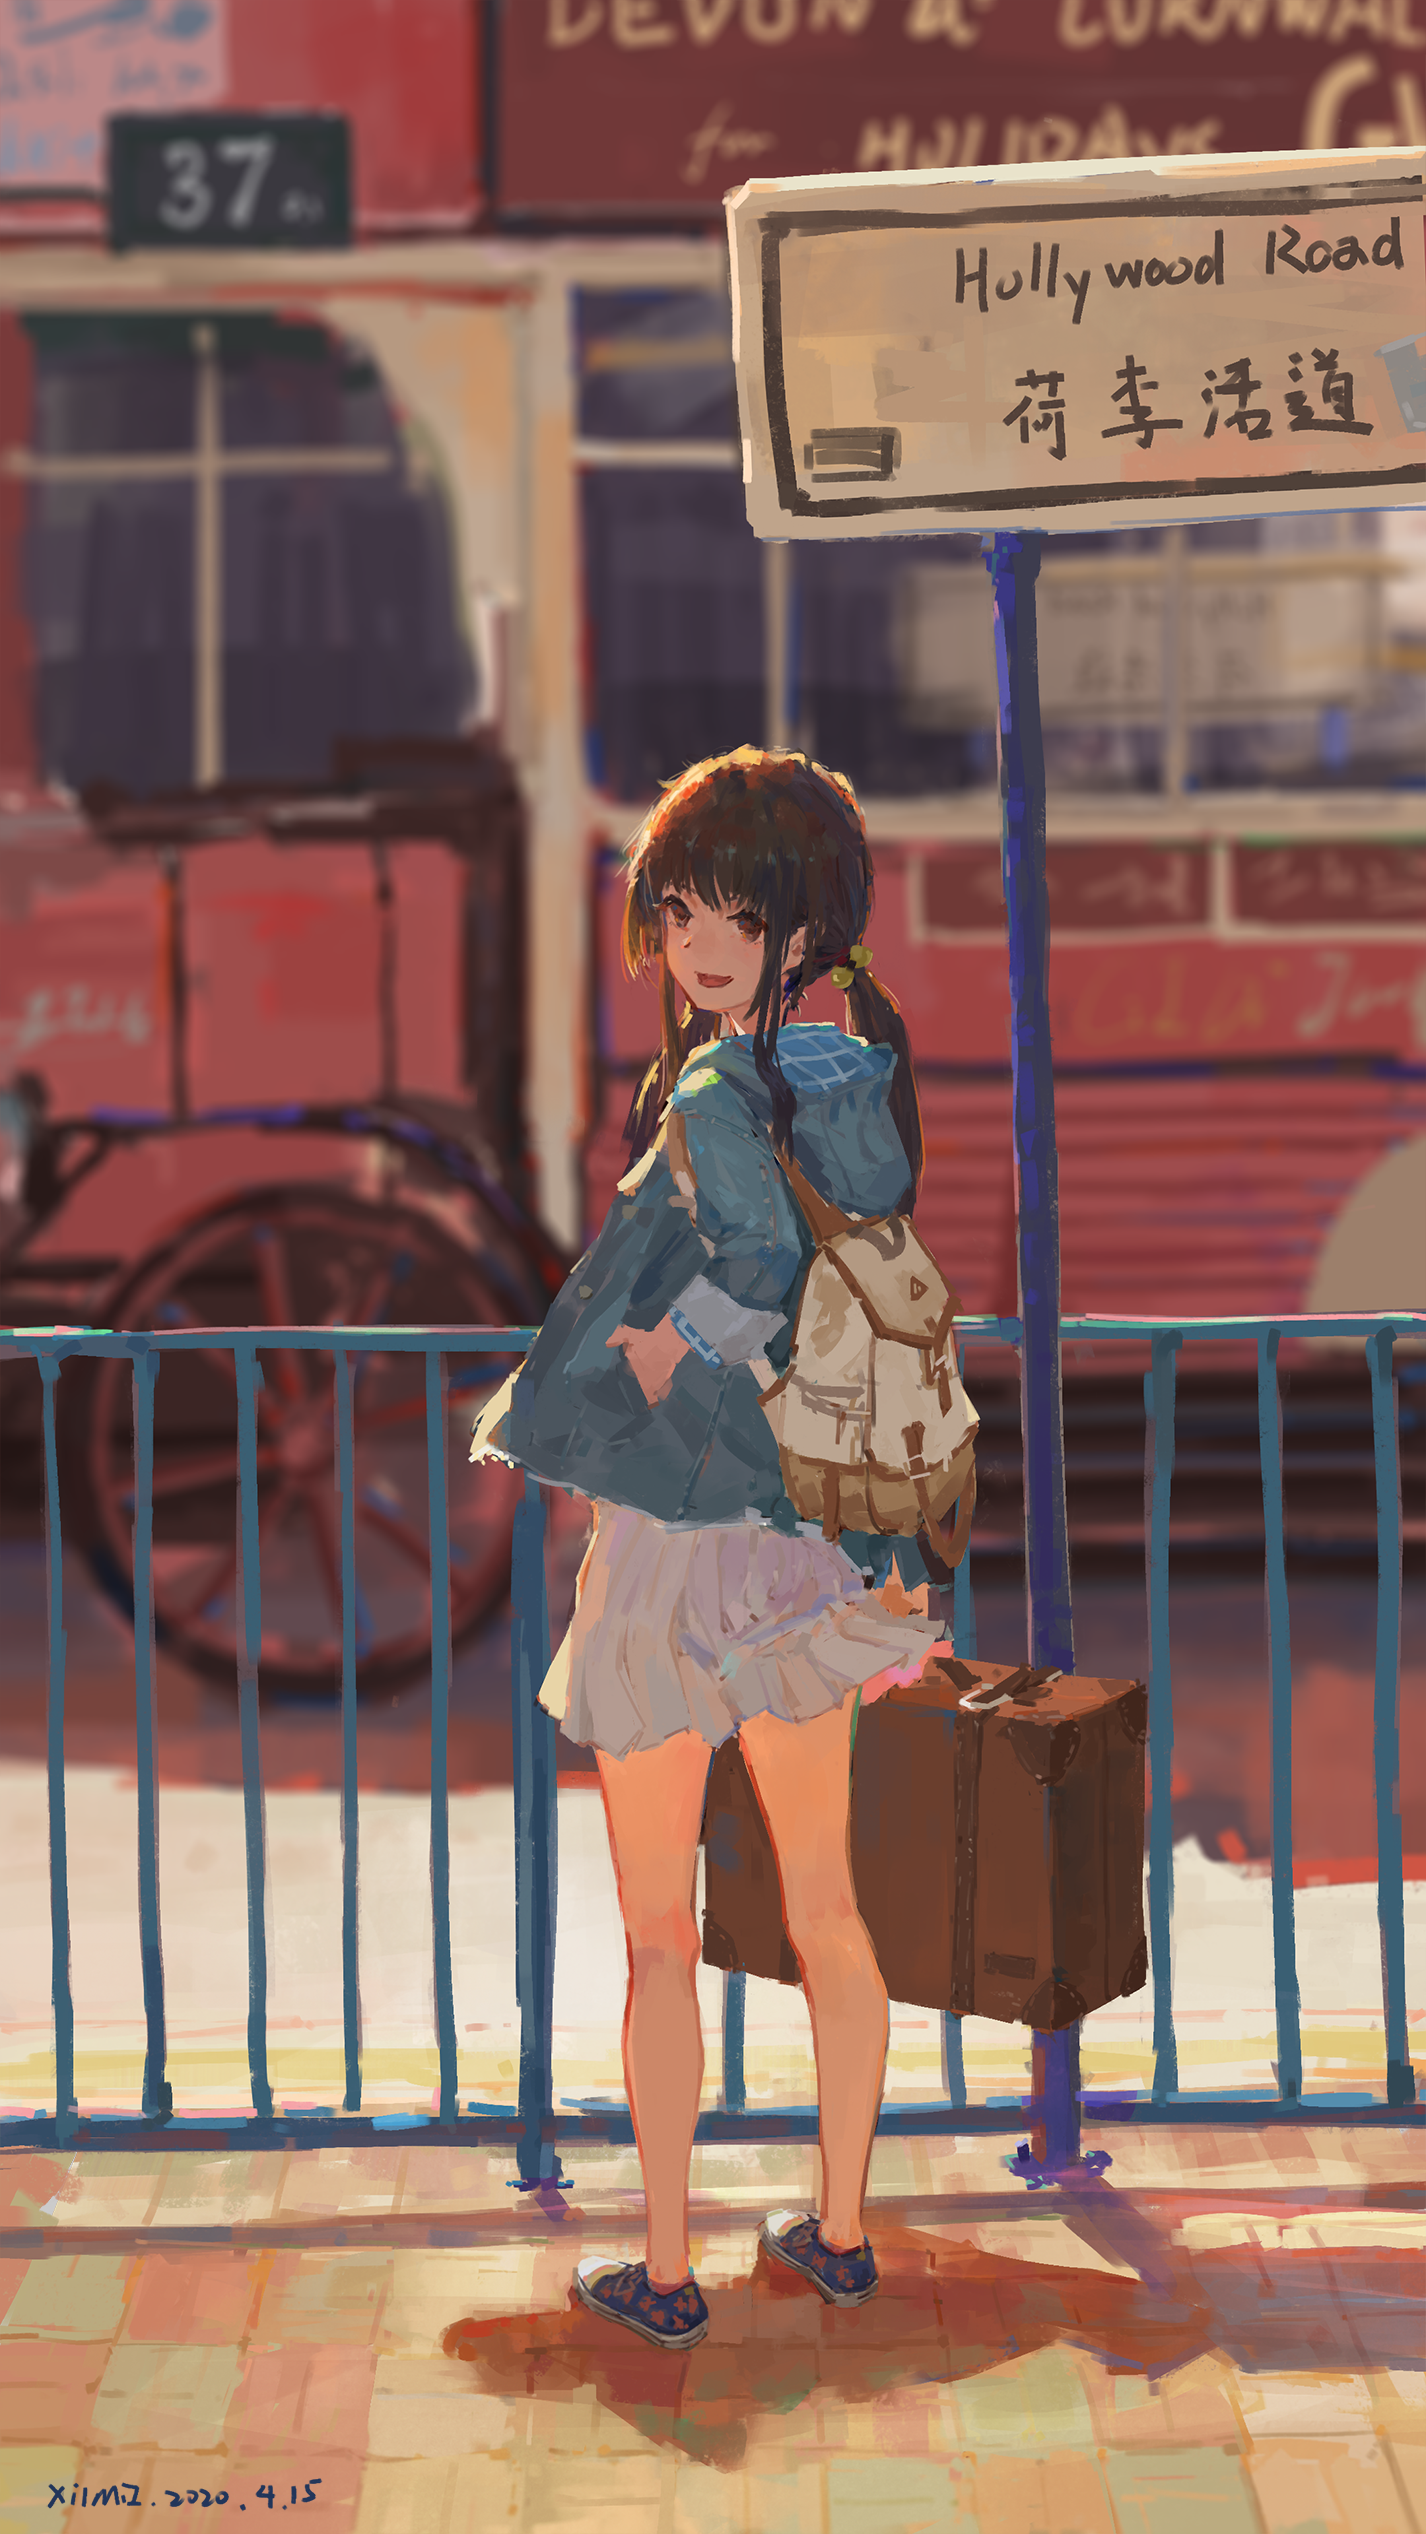 XilmO Anime Anime Girls Artwork Buses Fence 1426x2534